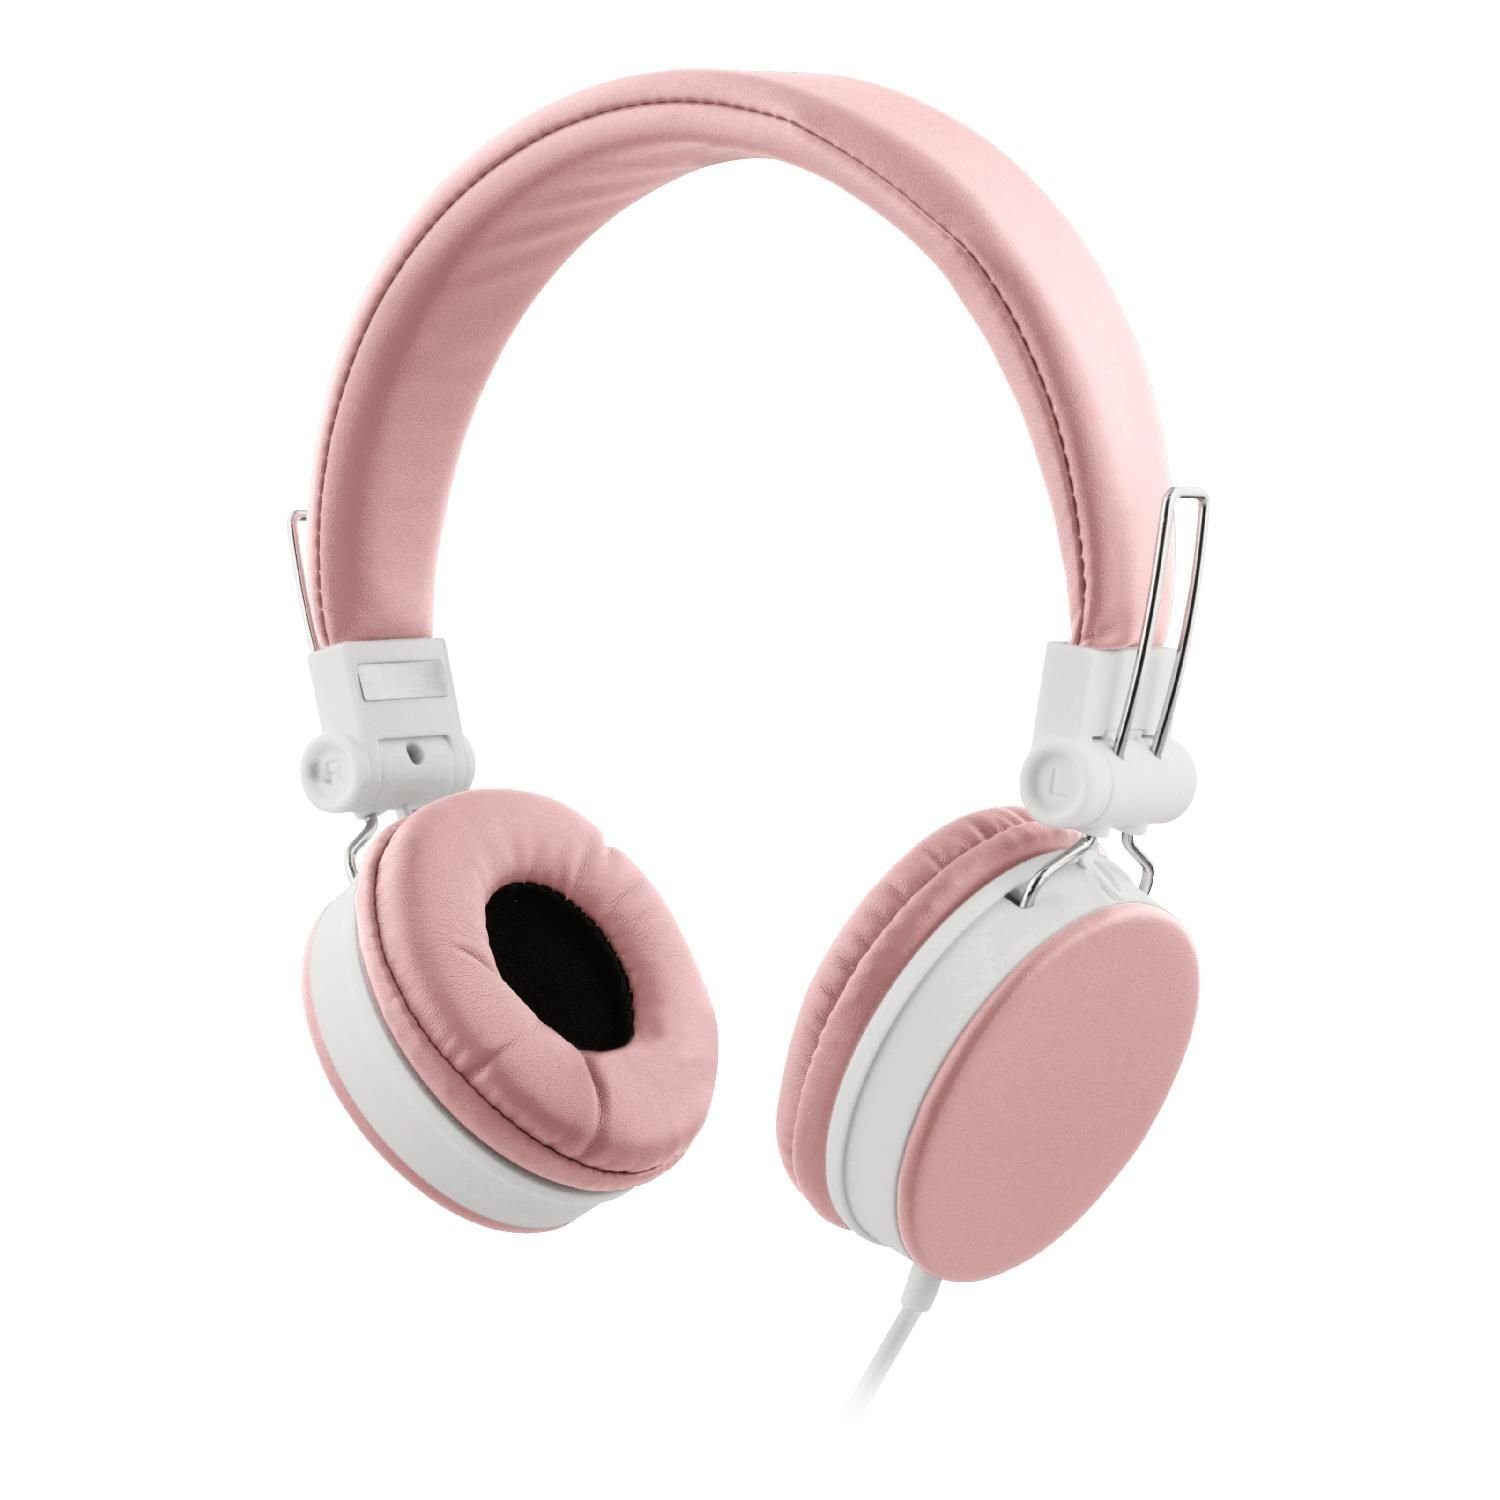 (integriertes Kopfhörer pink inkl. Kabel 3.5mm rosa, Ohrpolster 1,2m Herstellergarantie) Jahre STREETZ / 5 faltbares Headset, Klinkenanschluss Mikrofon, On-Ear-Kopfhörer